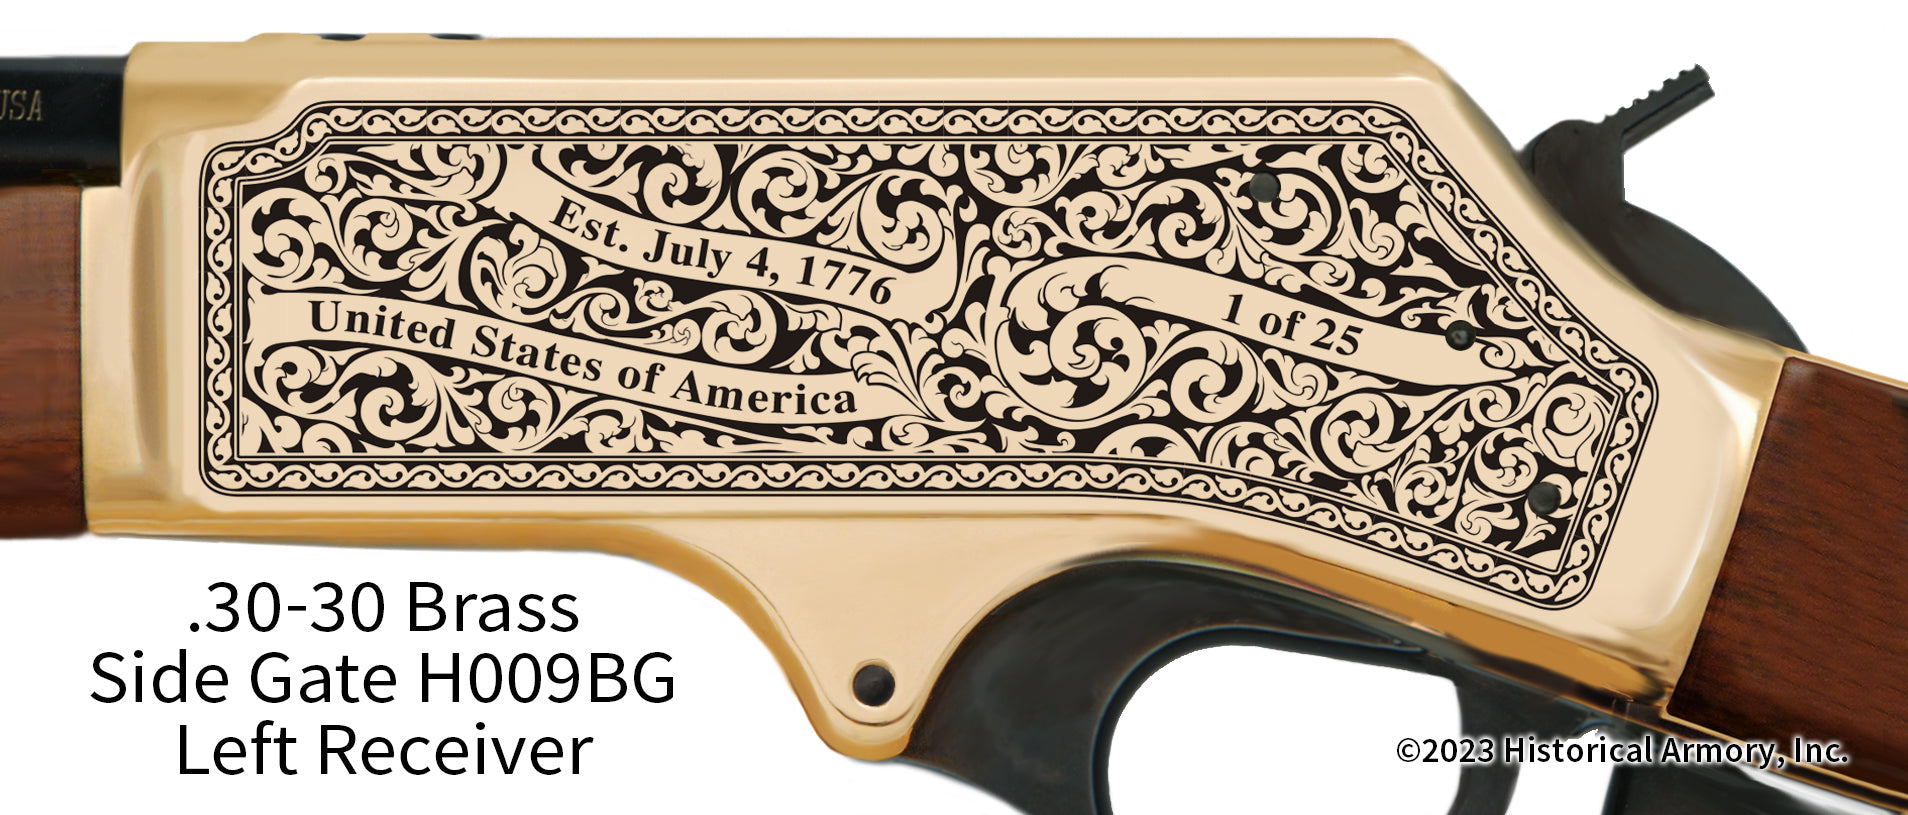 Bond County Illinois History Engraved Henry .30-30 Rifle